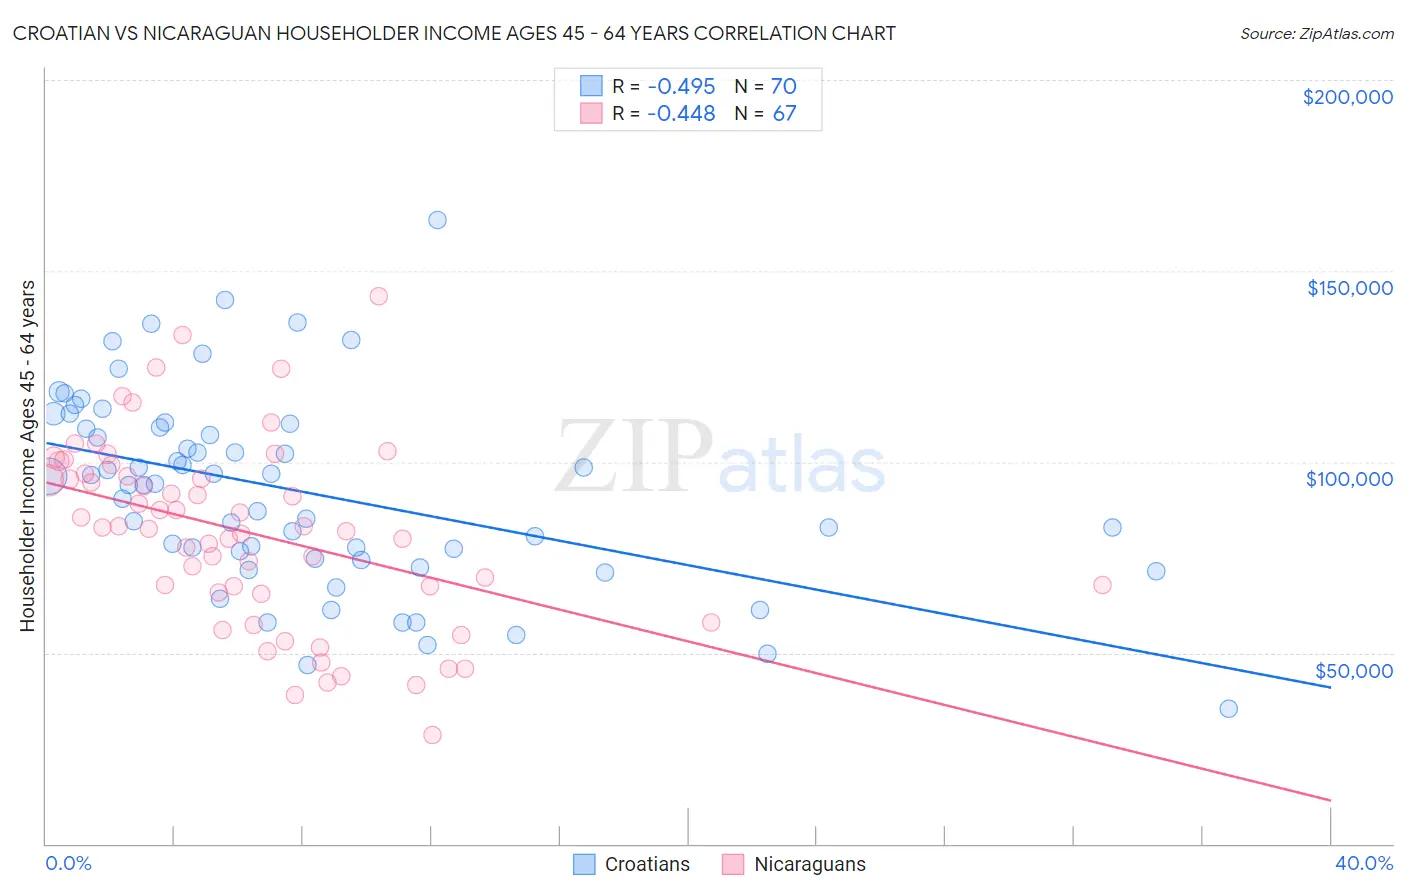 Croatian vs Nicaraguan Householder Income Ages 45 - 64 years